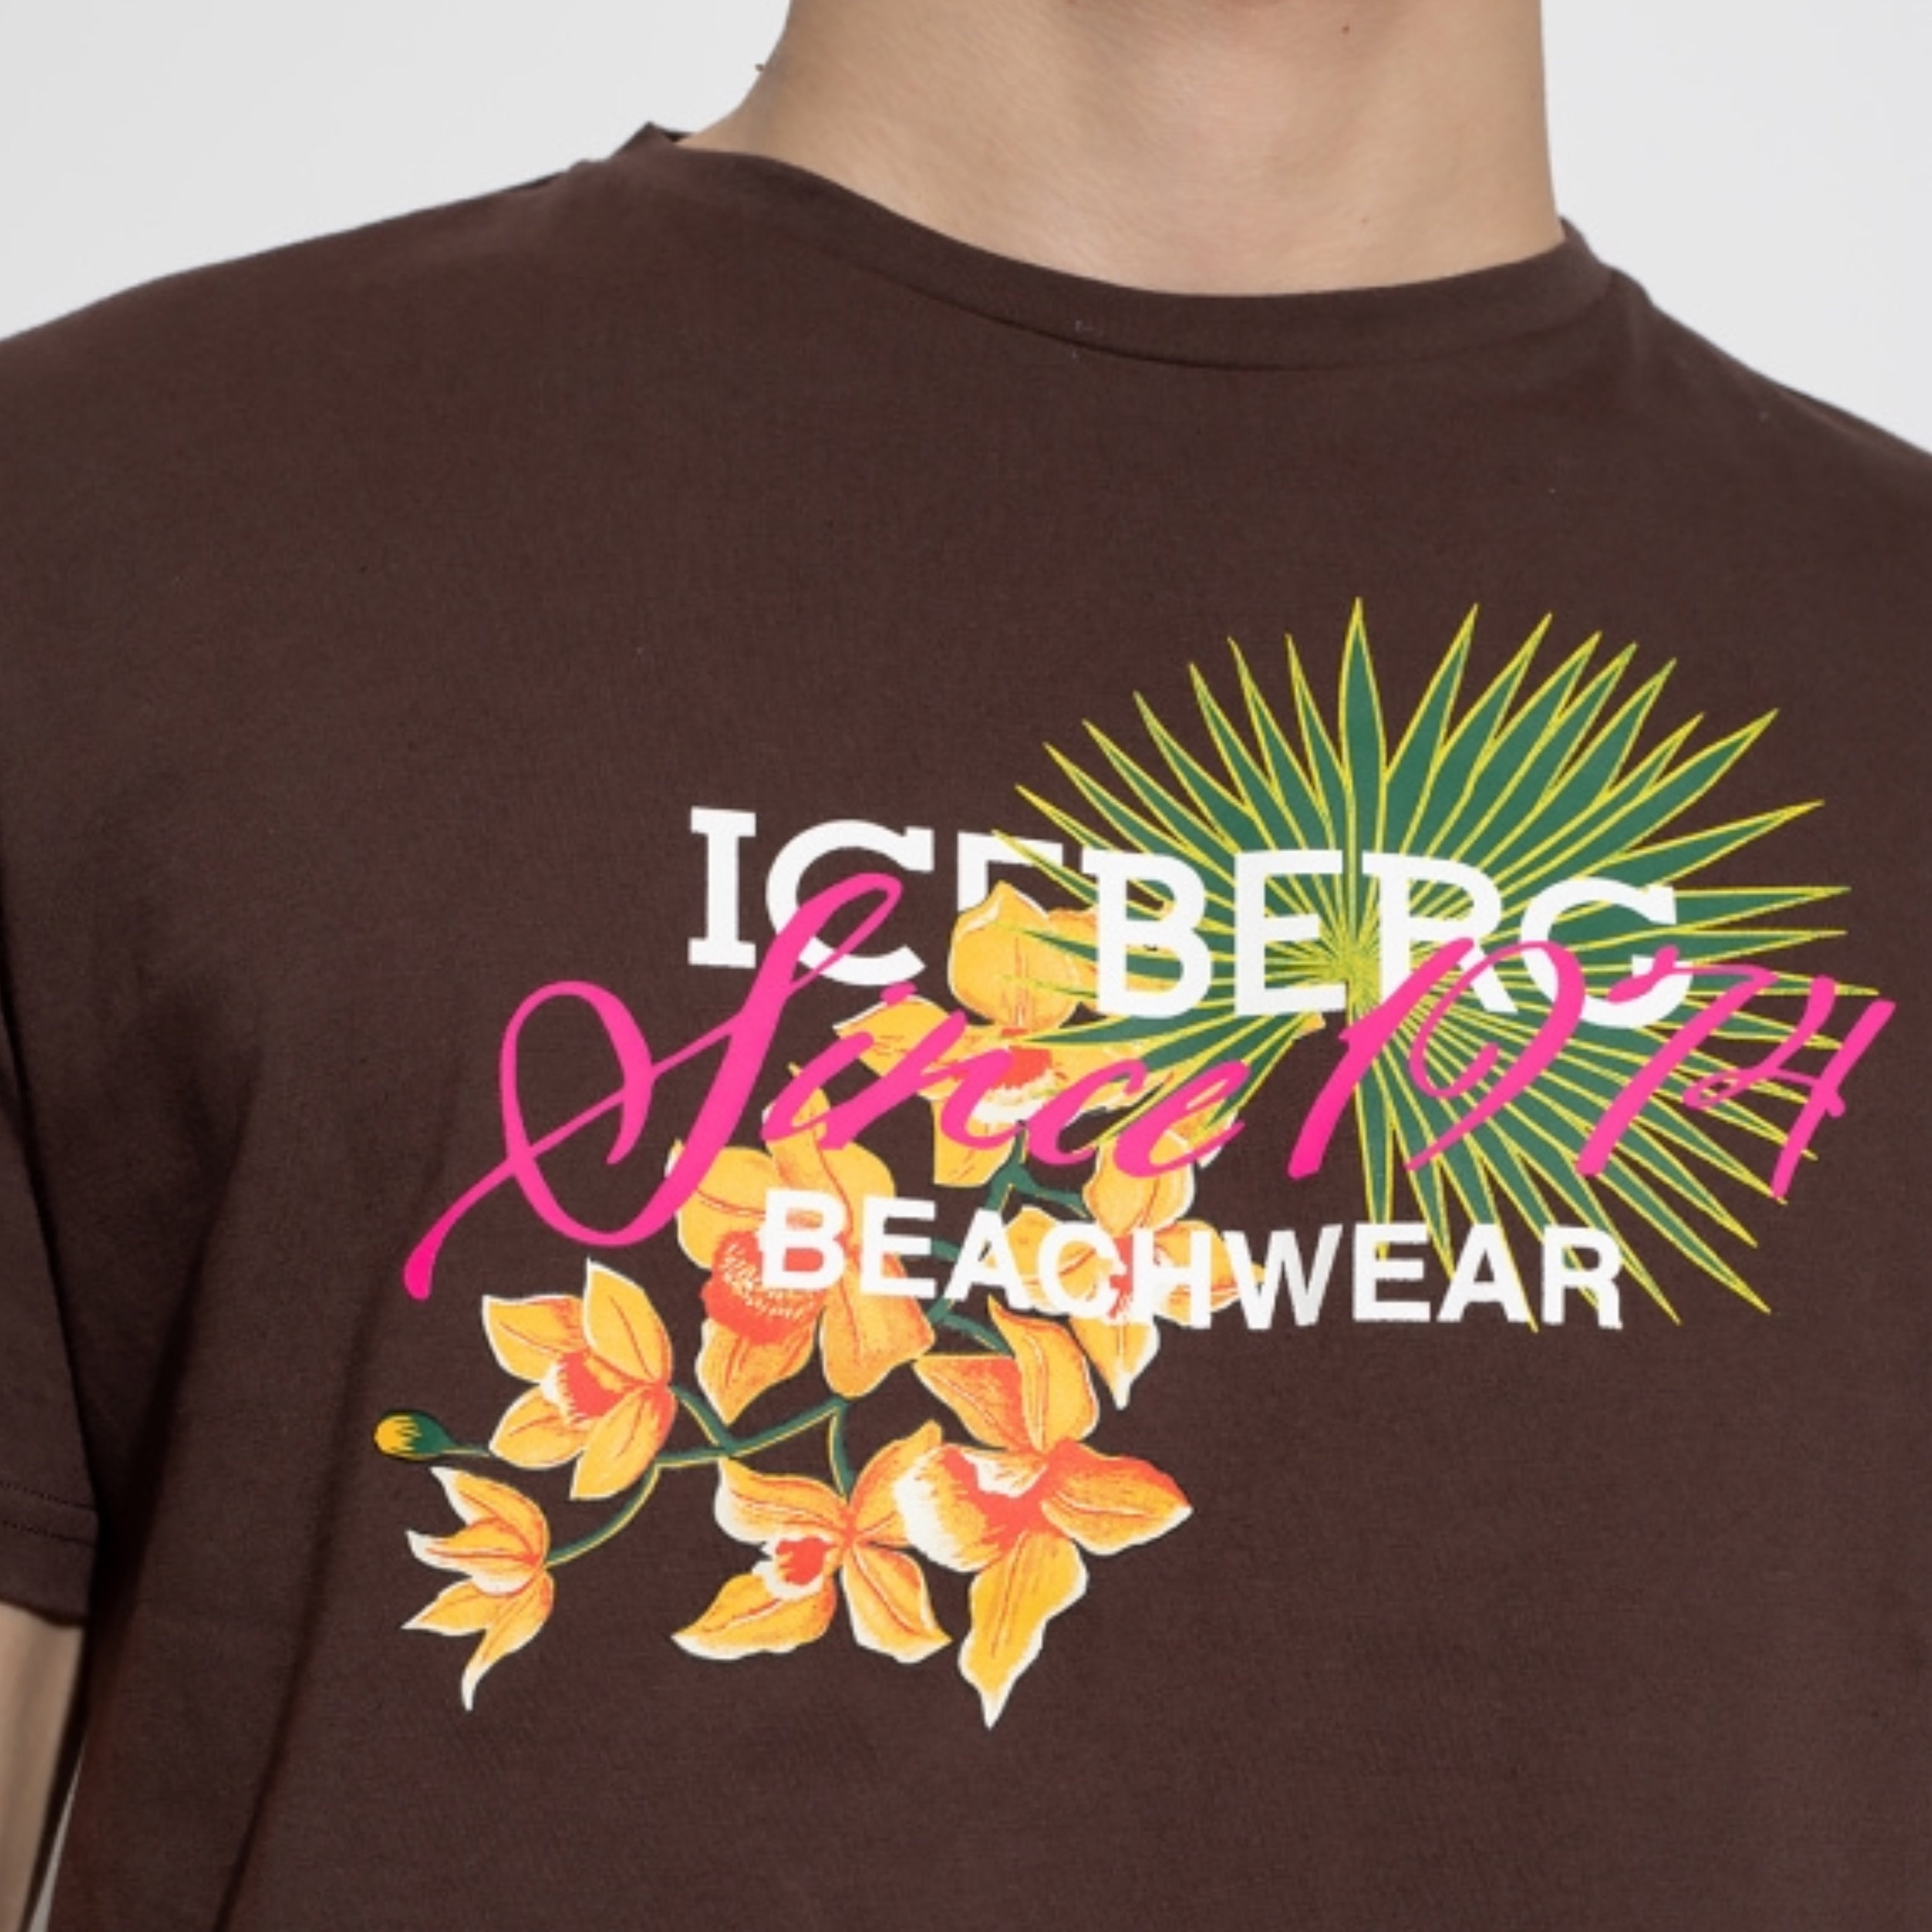 Iceberg Beachwear T-shirts